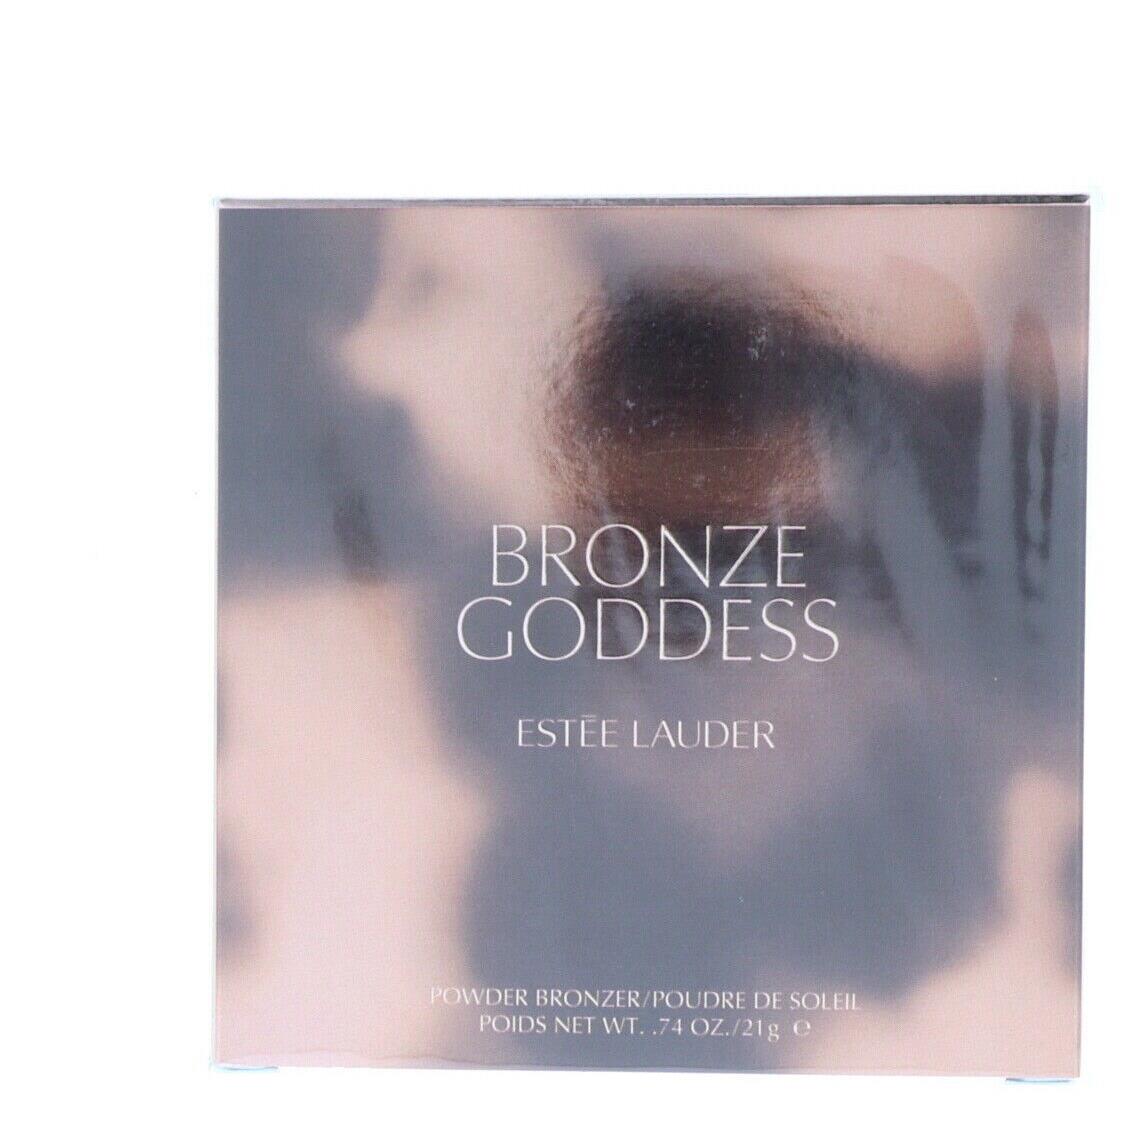 Estee Lauder Bronze Goddess Powder Bronzer 01 Light 0.74 oz 4 Pack